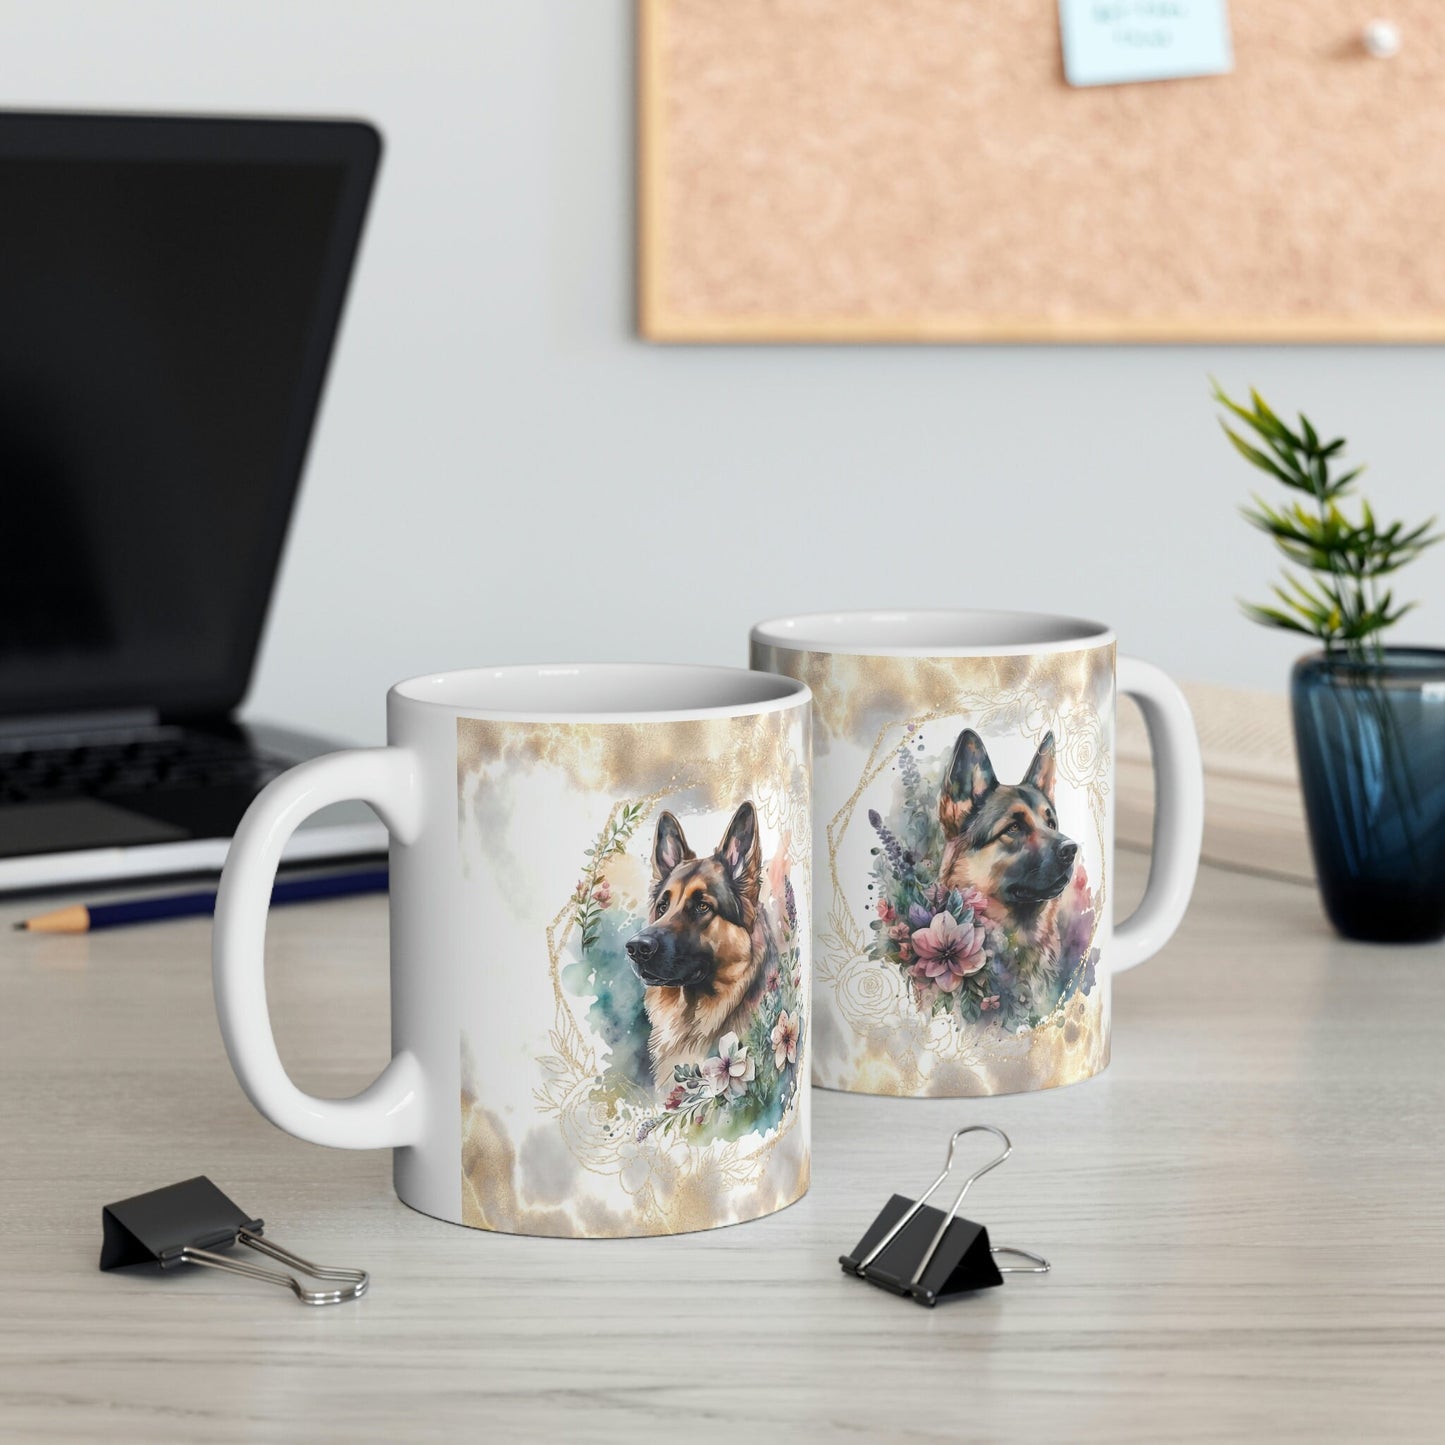 German Shepherd Appreciation Mug, Coffee And Dog Lover's Premium Ceramic Cup, Alsatian Collectable Mug, Caffeine Addicts Present, Beautiful